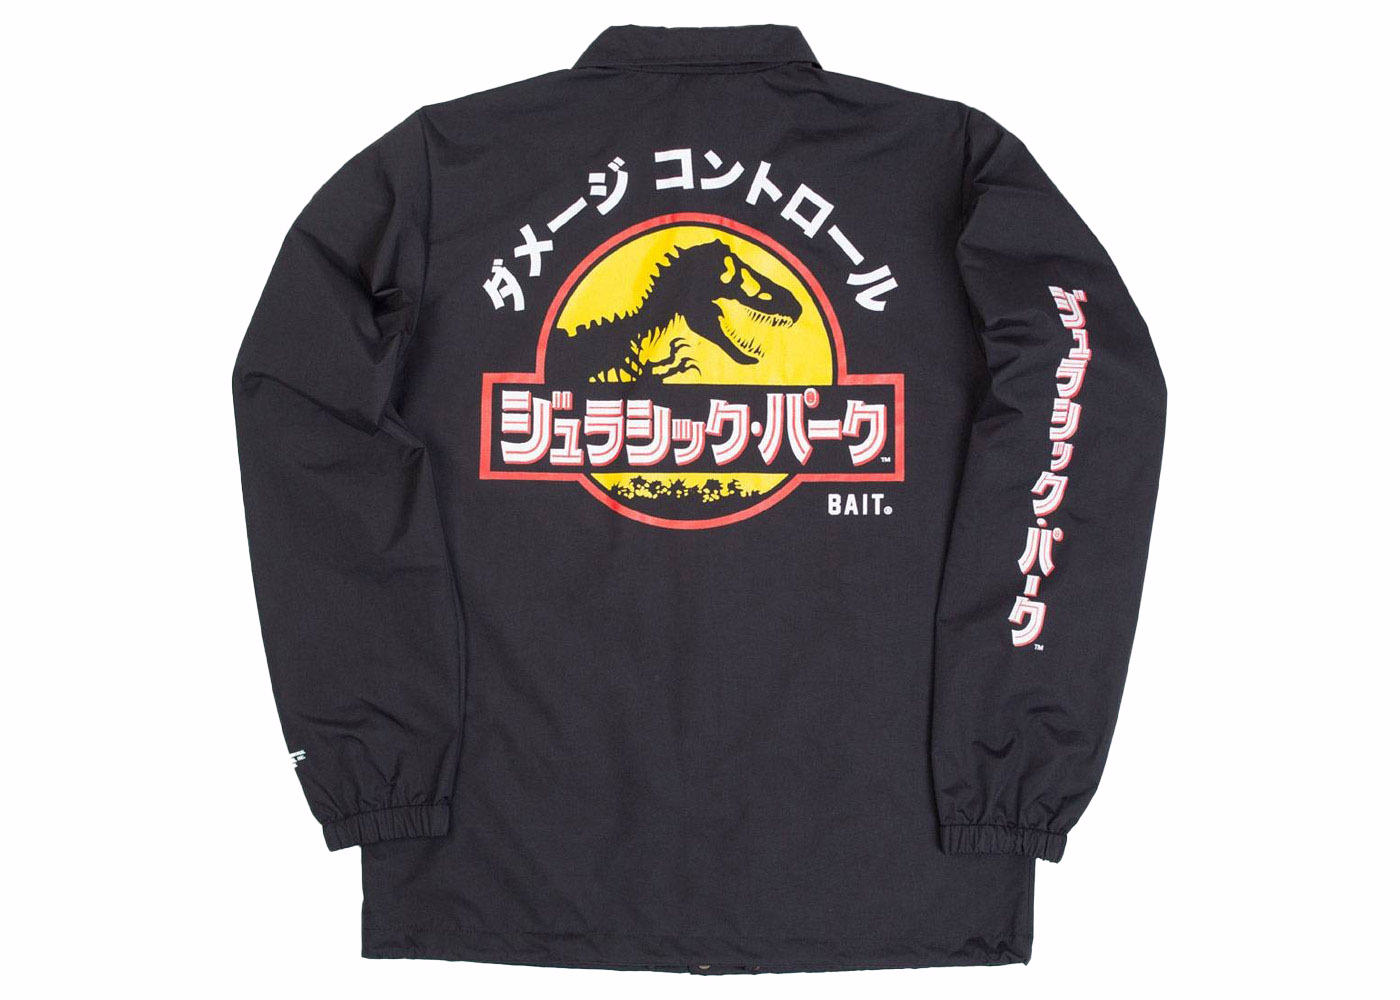 BAIT x Jurassic Park Damage Control Coaches Jacket Black